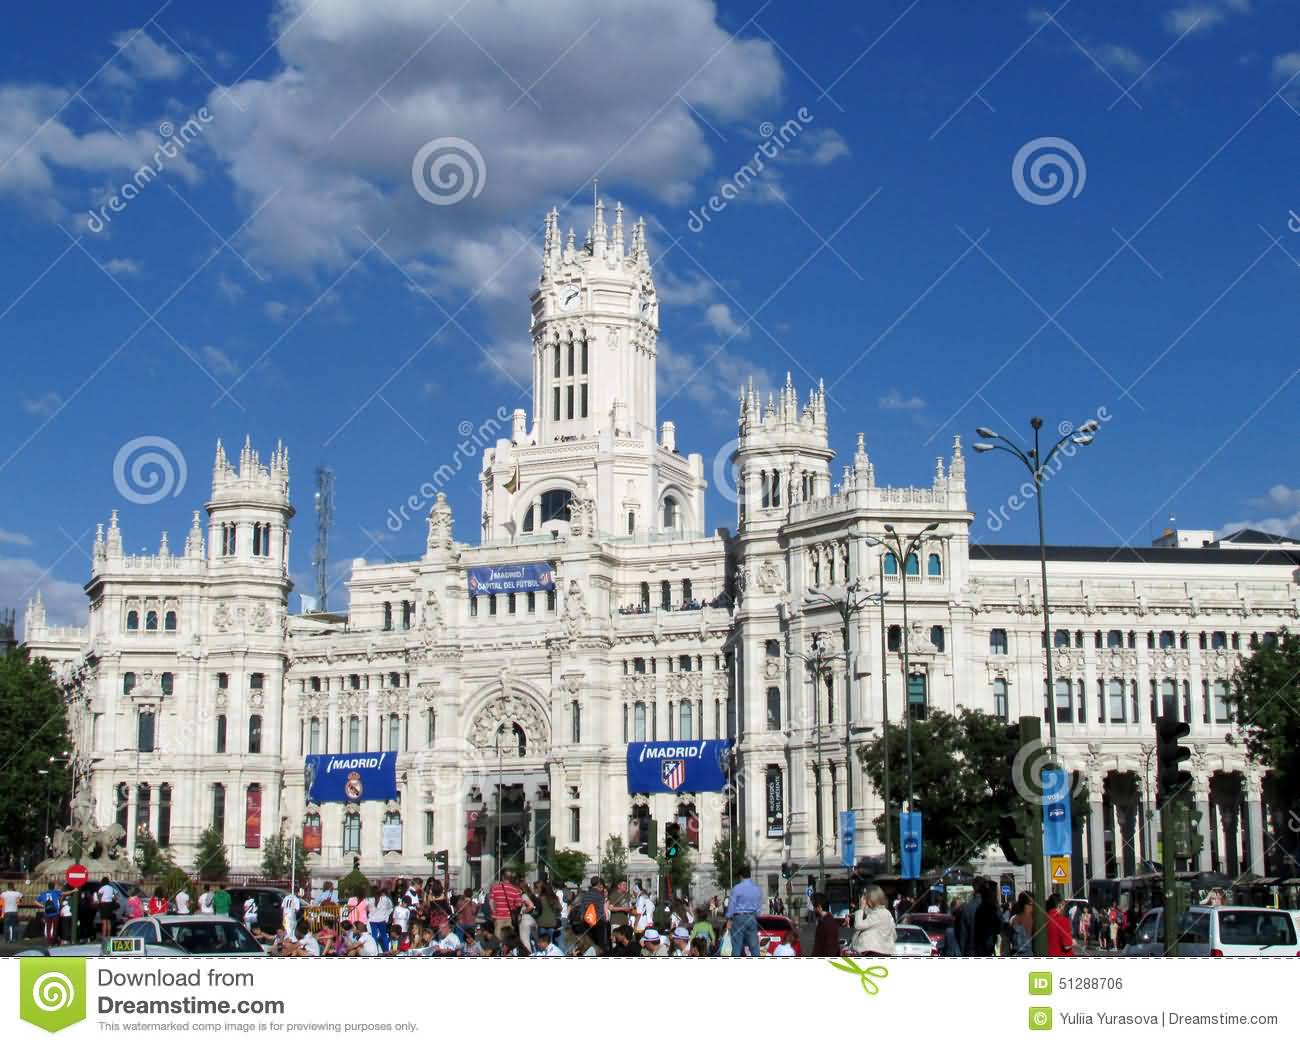 Cybele Palace On Plaza de Cibeles In Madrid